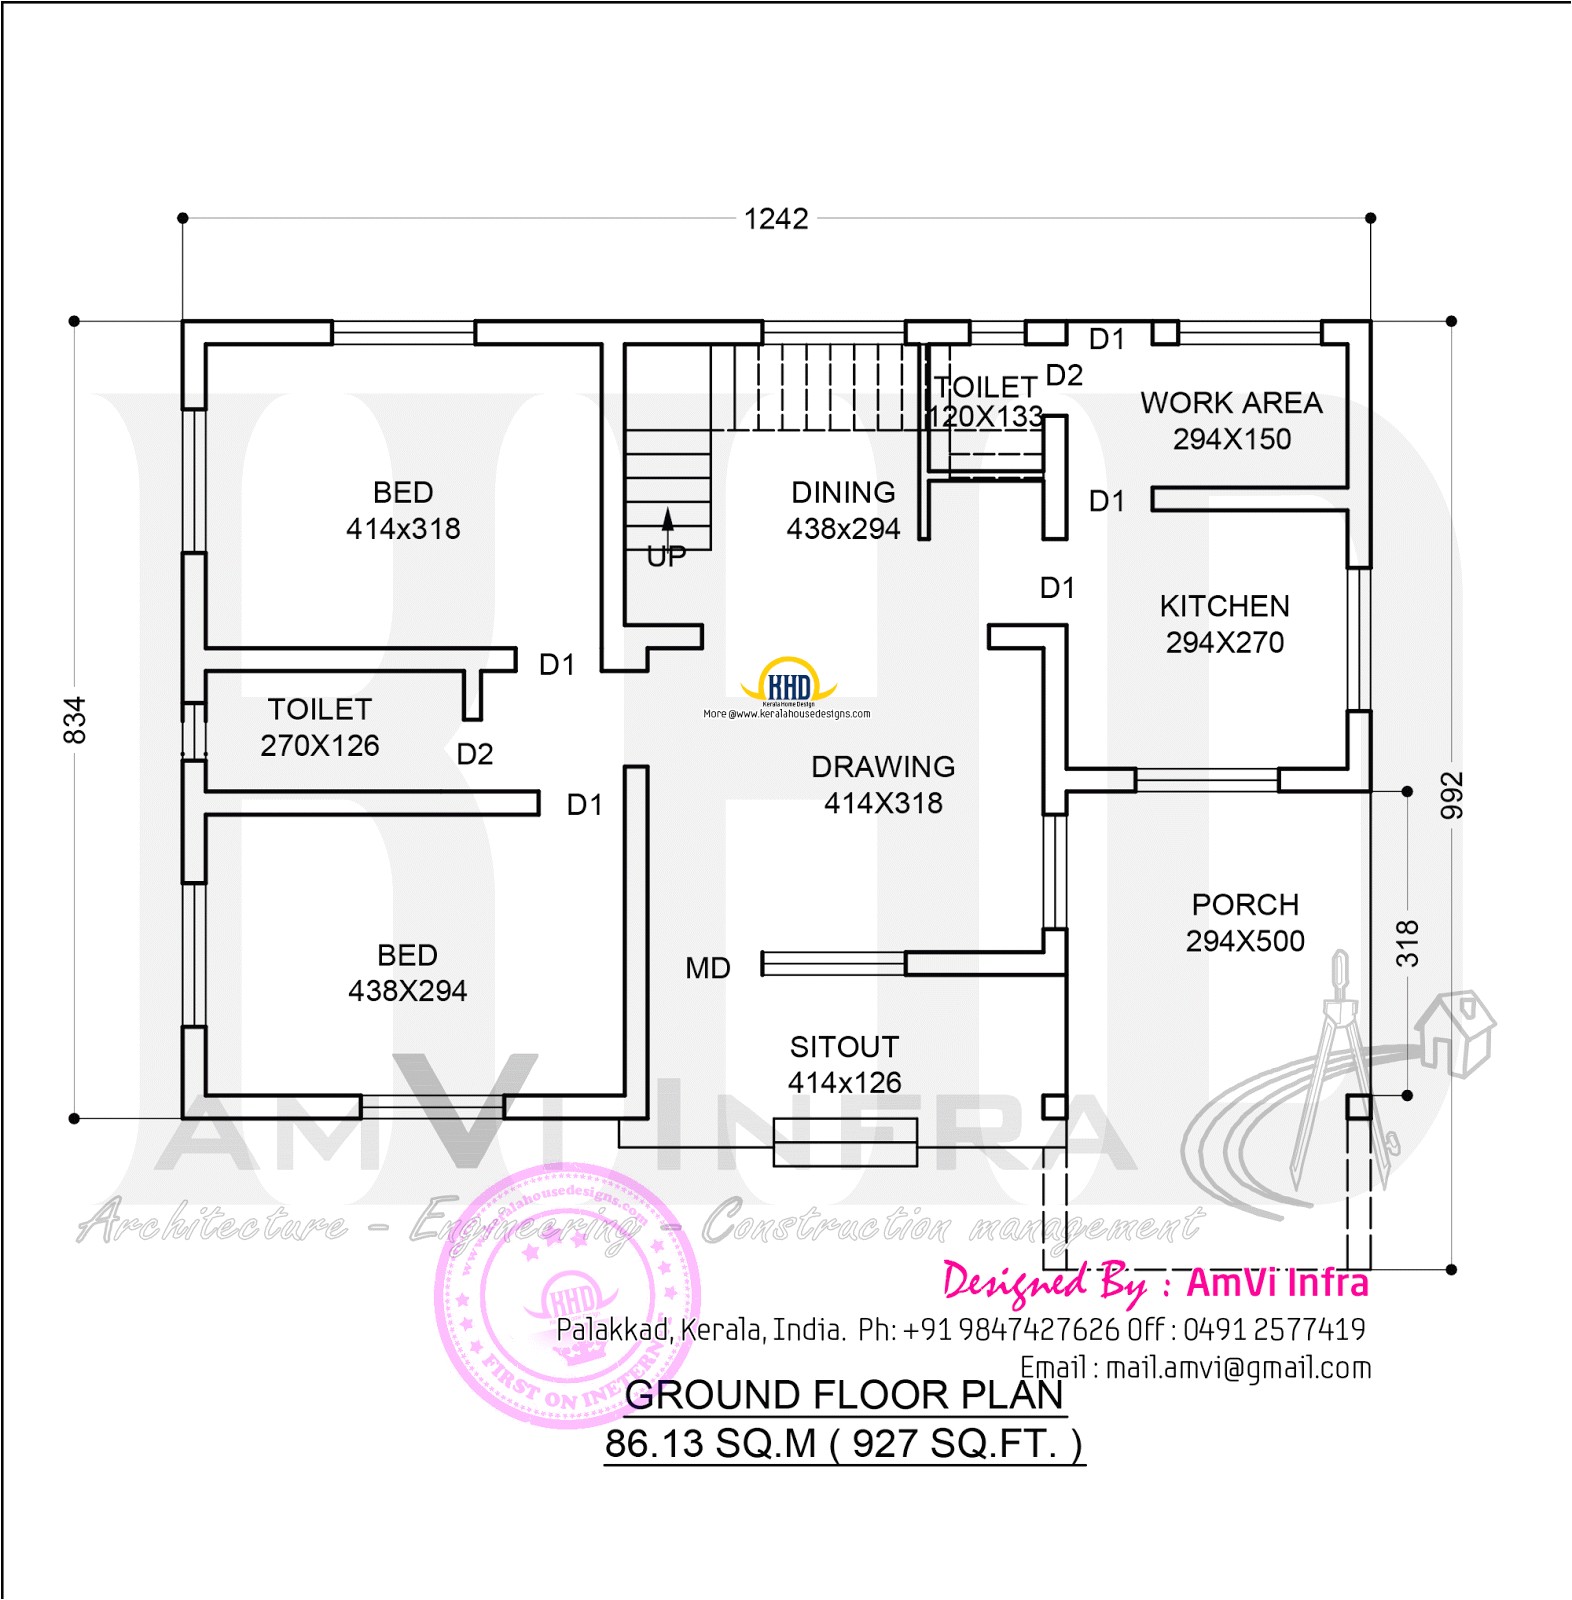 Home Drawing Plan Kerala Model Home Design In 1329 Sq Feet Kerala Home